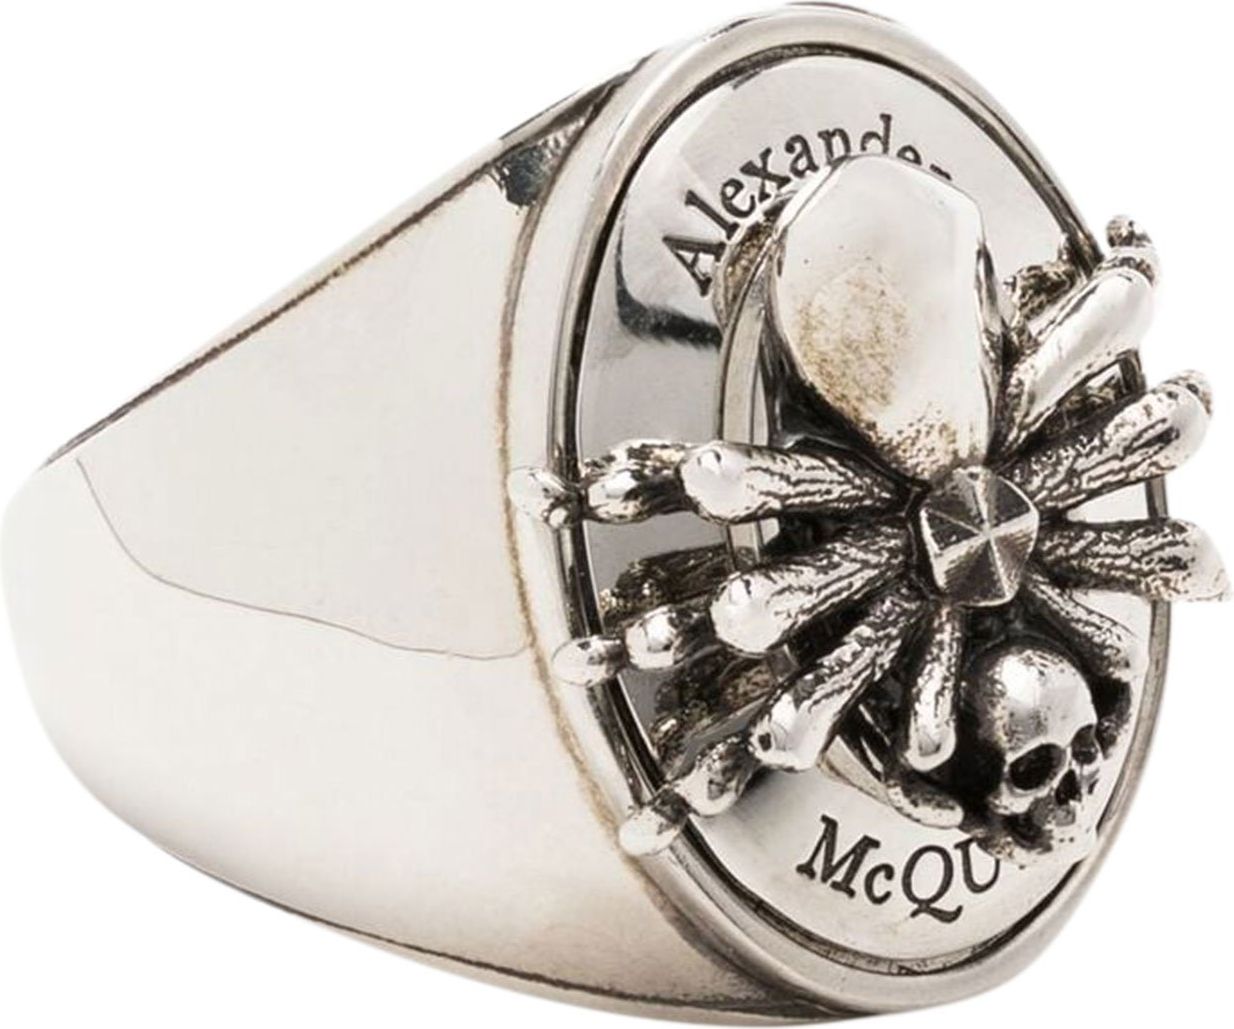 Alexander McQueen Spider Skull signet ring Metallic